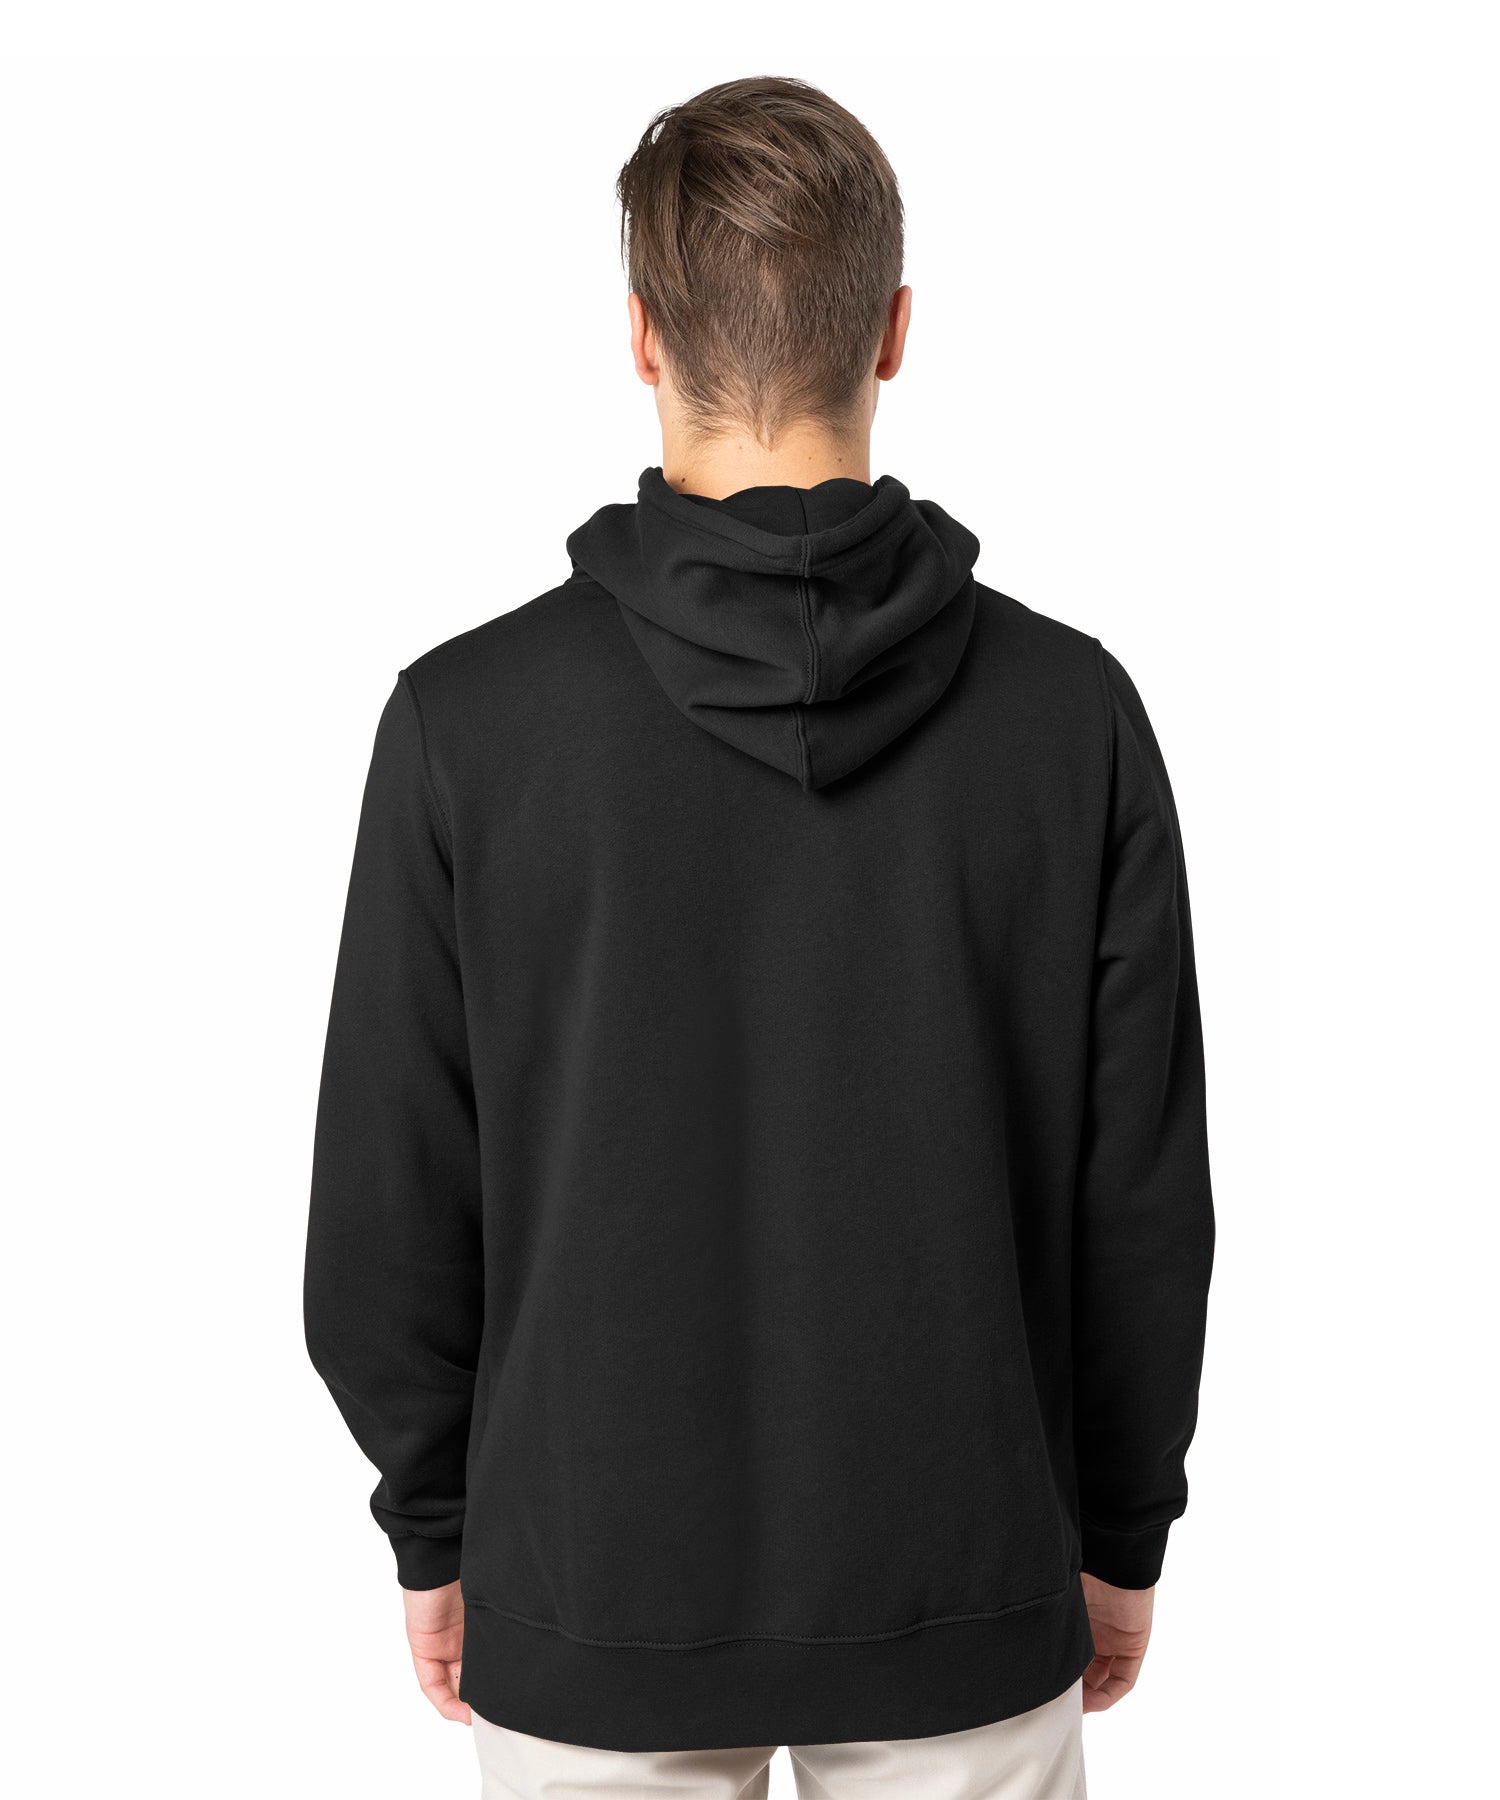 Premium Plain Cotton Black Hoodie/Sweatshirt